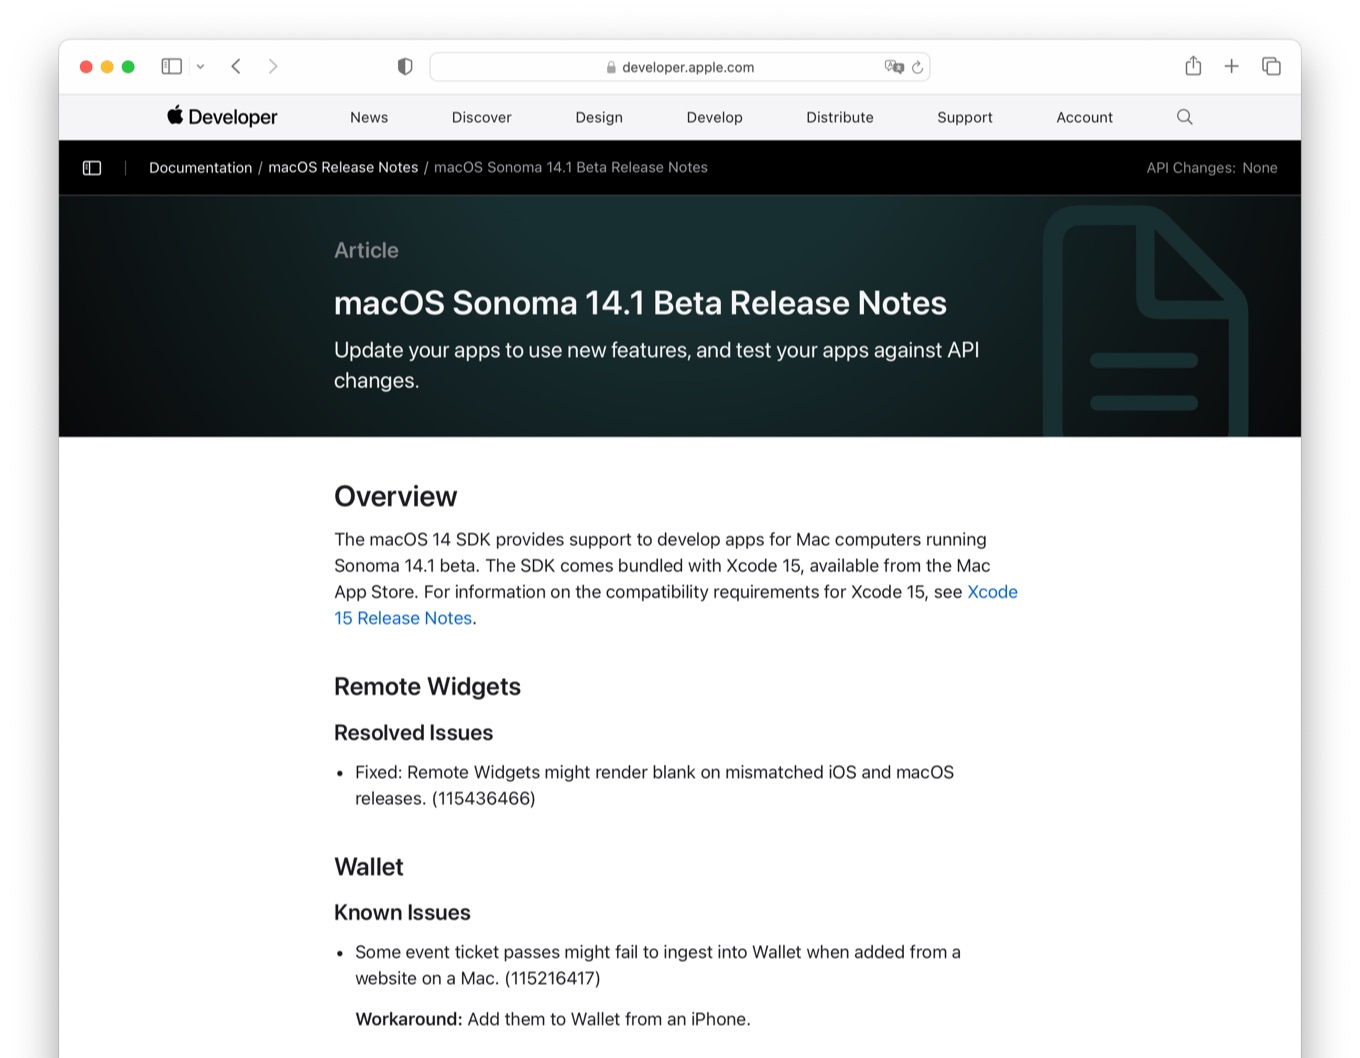 macOS Sonoma 14.1 Beta Release Notes